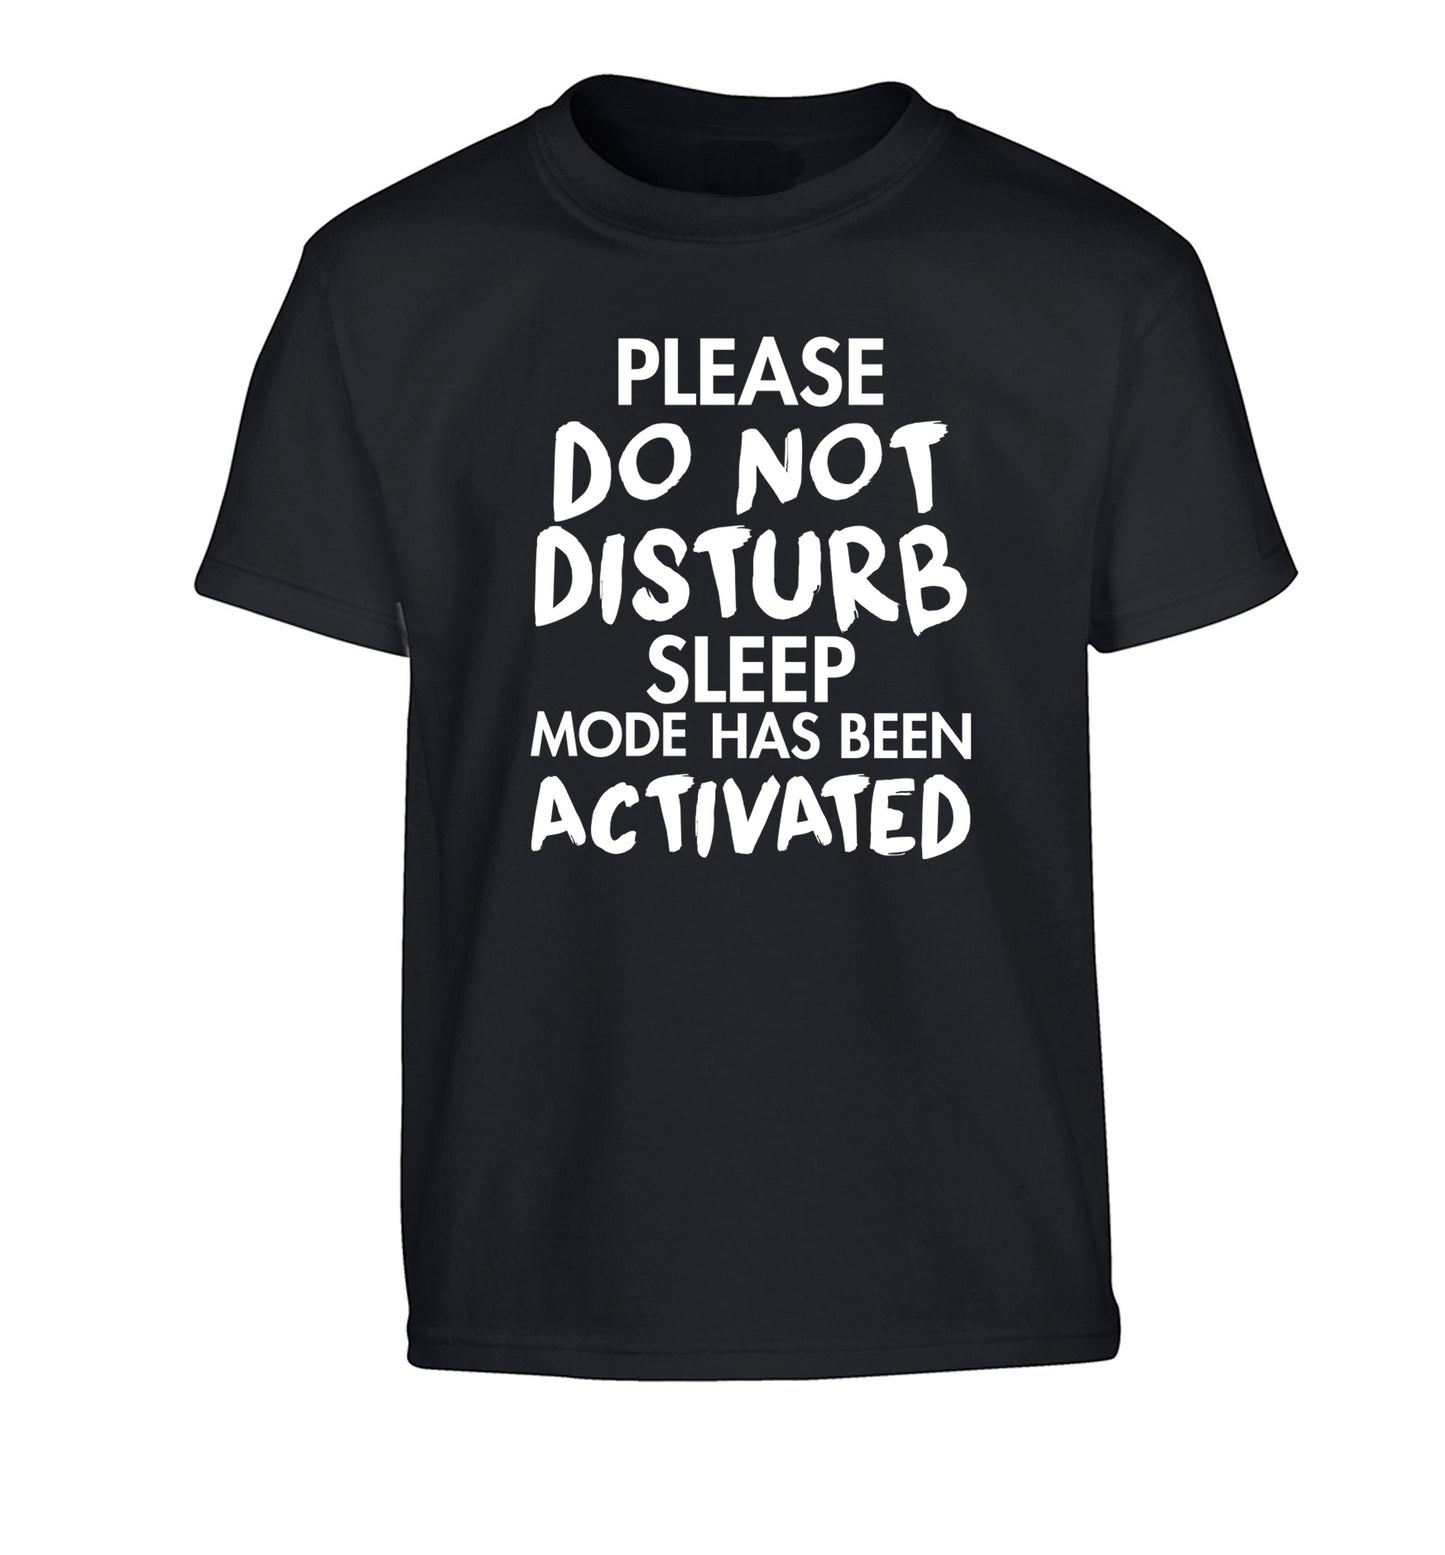 Please do not disturb sleeping mode has been activated Children's black Tshirt 12-14 Years